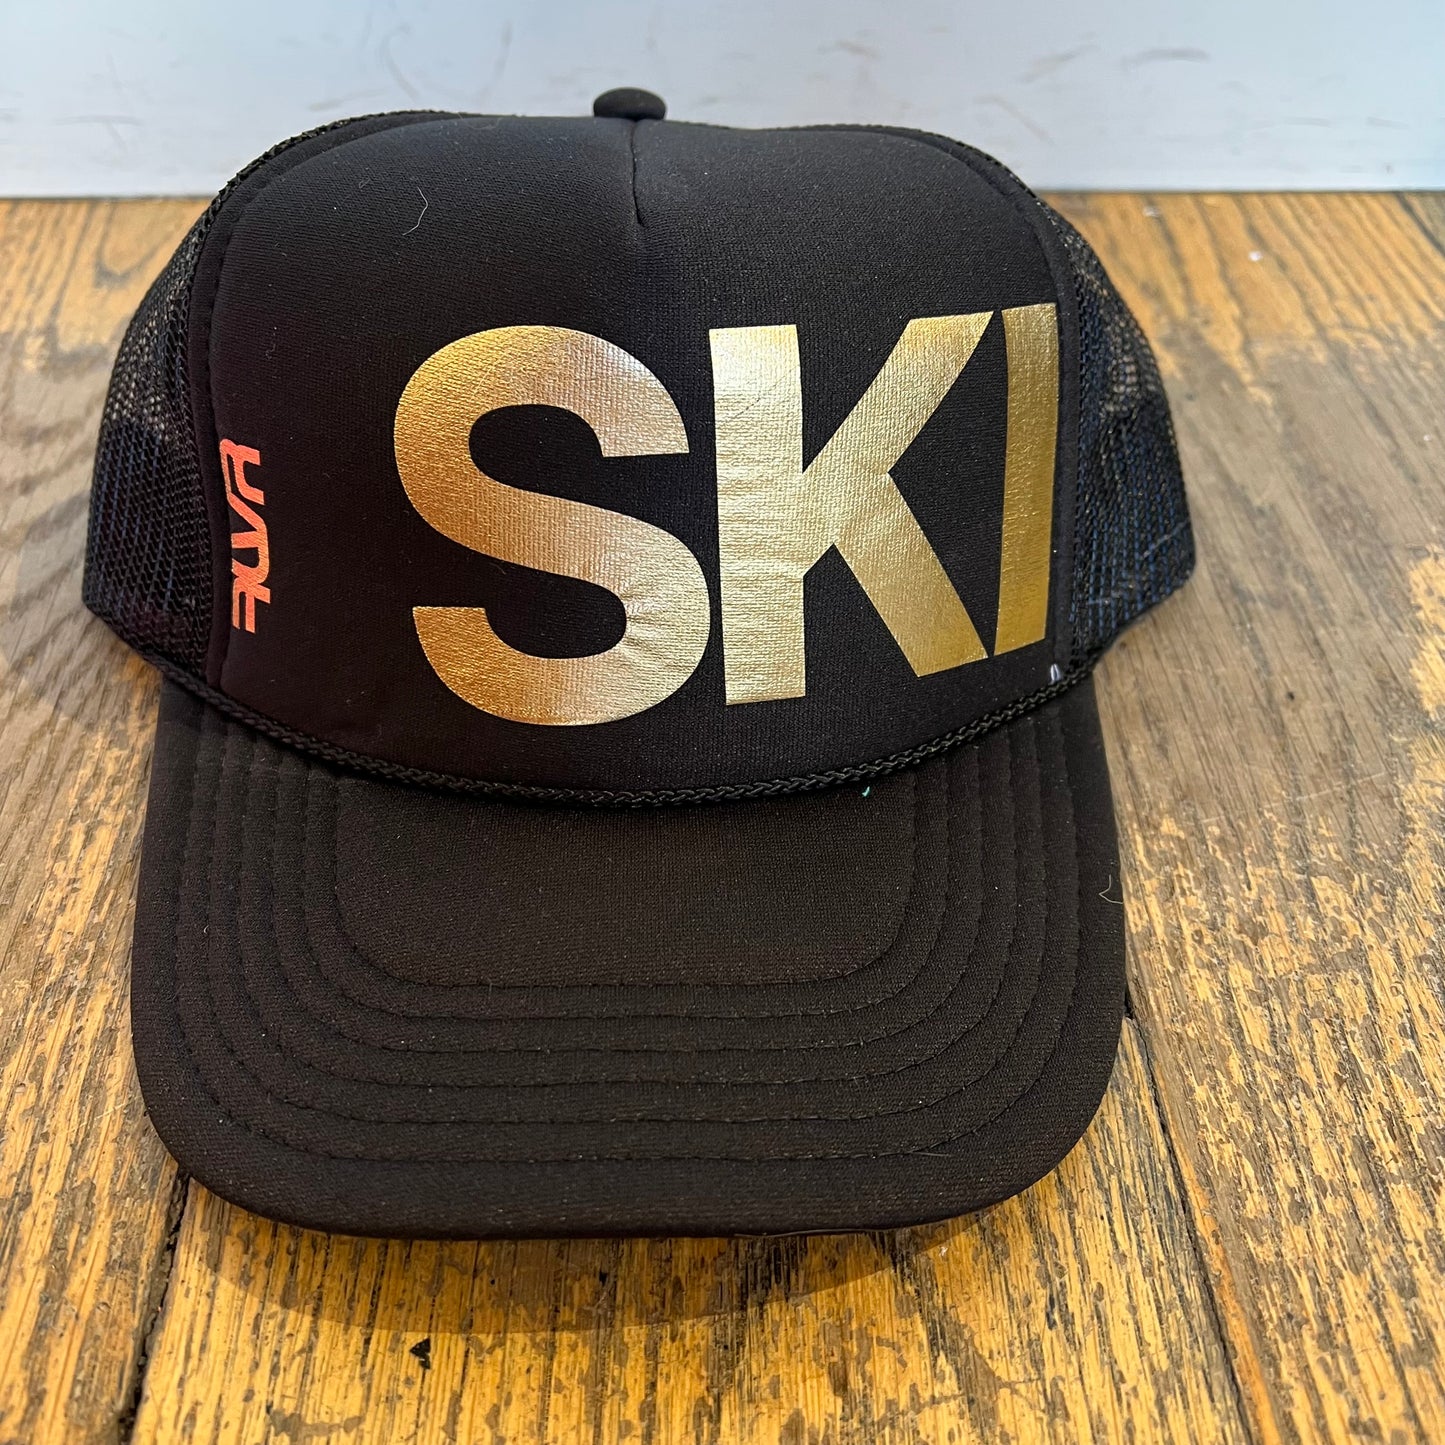 Eskyflavor SKI Trucker Hat